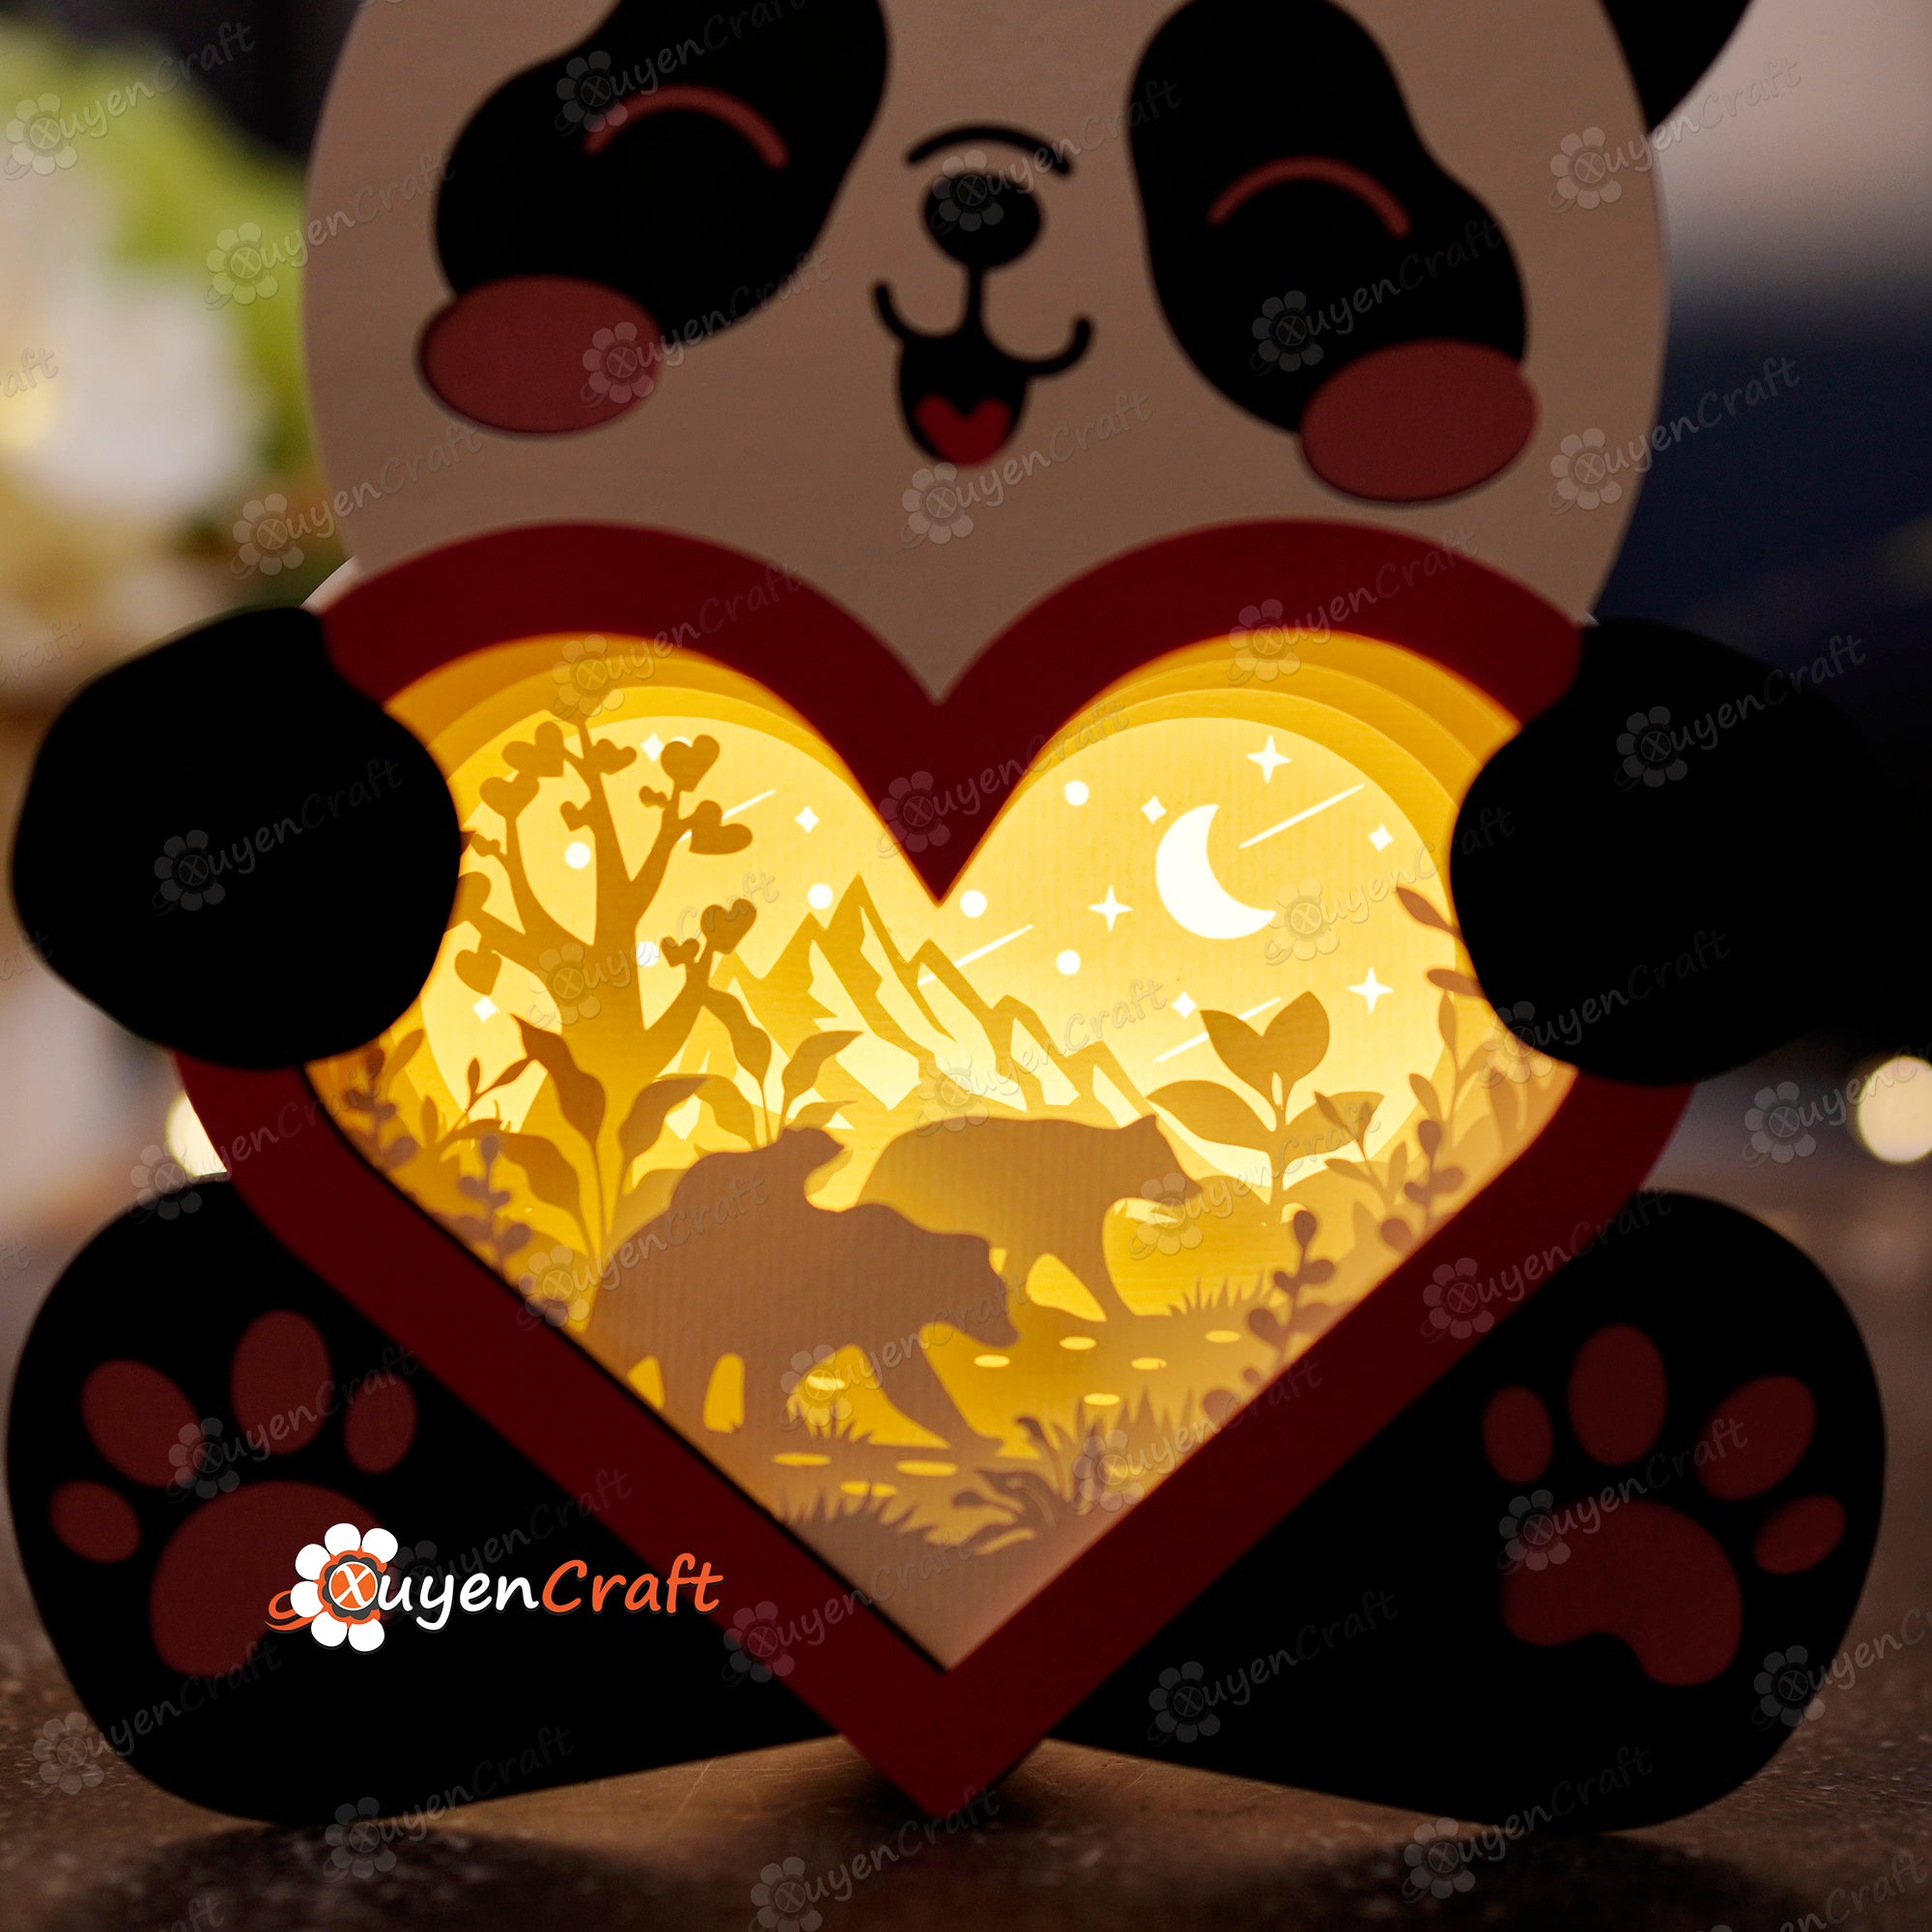 Pack 3 Panda Heart Lantern Shadow Box PDF, SVG Template - DIY Couple Panda, Bear Family Lightbox for Valentine's Day